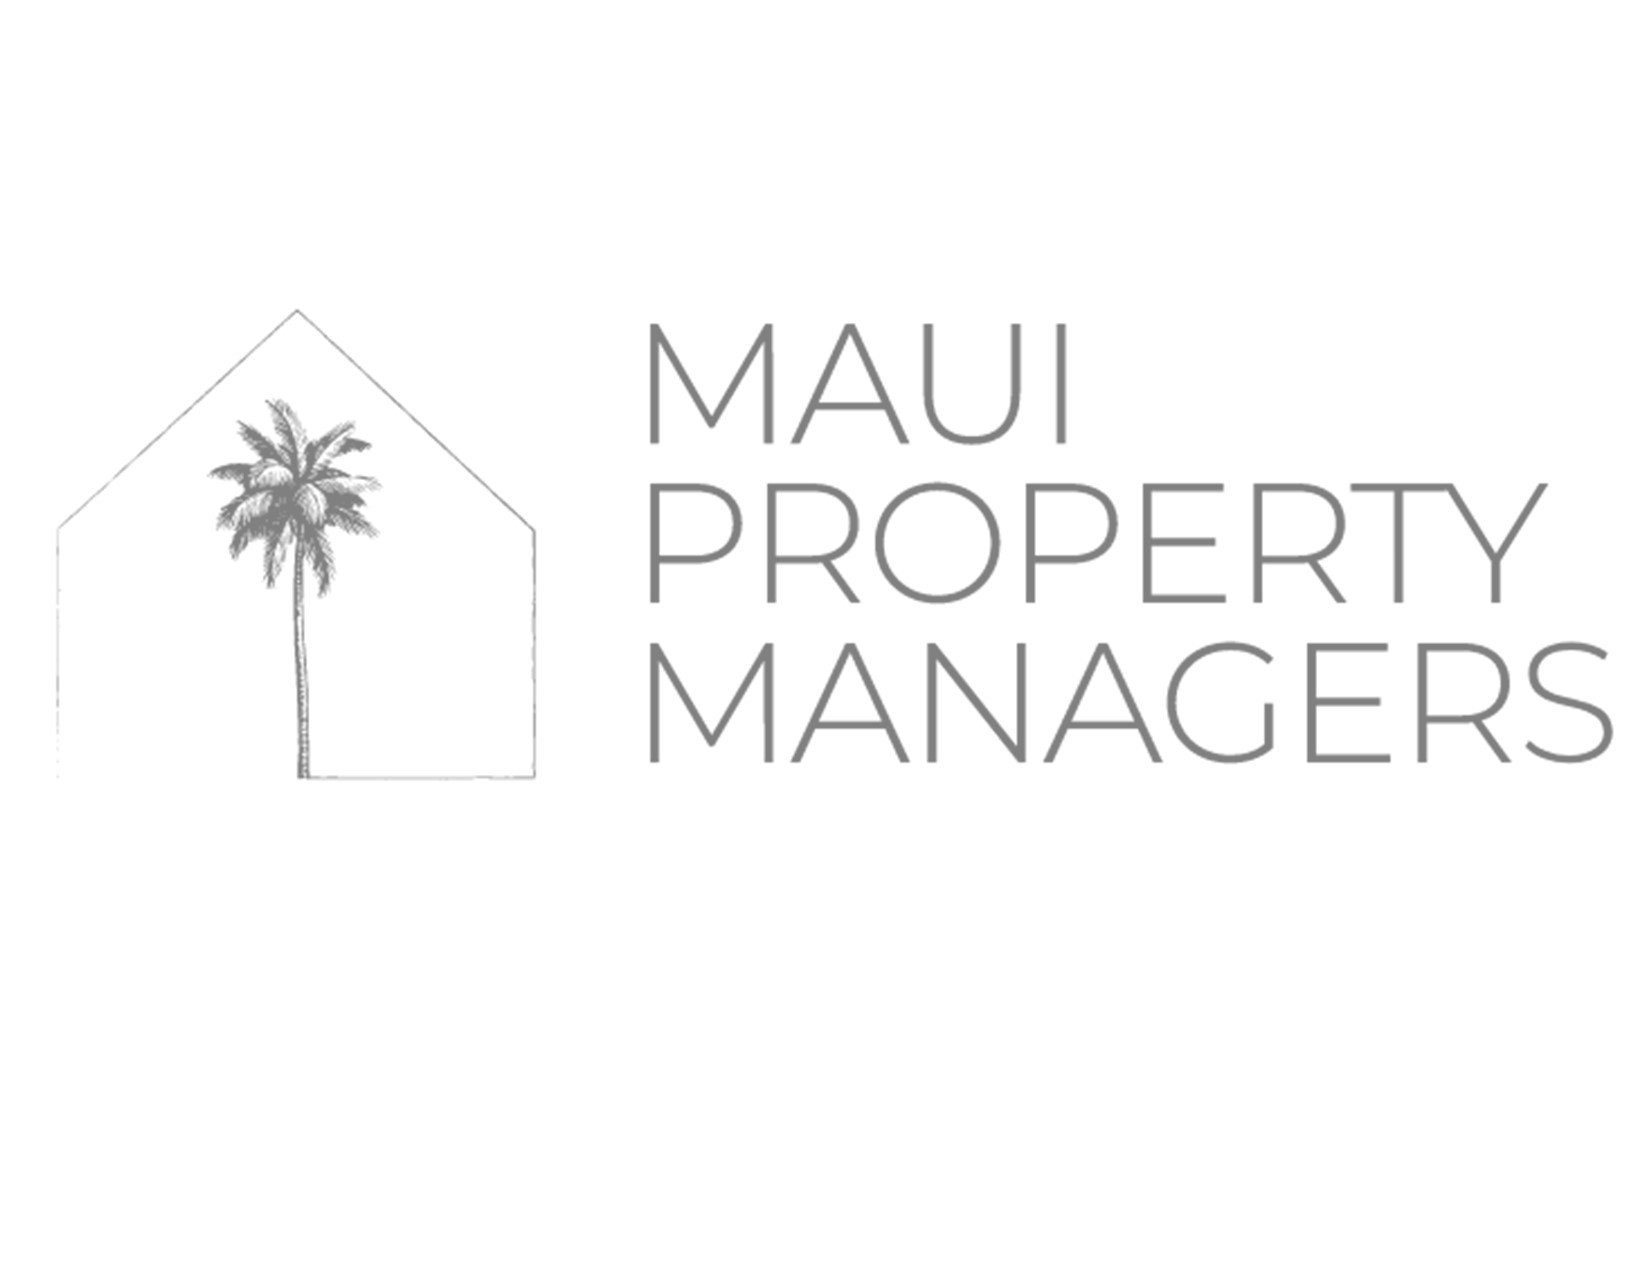 Maui Property Managers logo